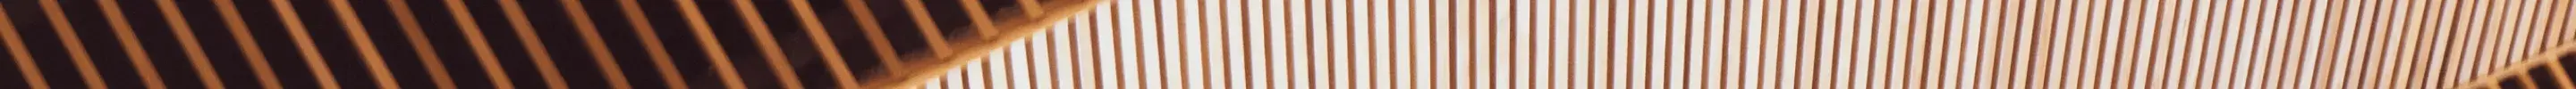 wooden slats texture